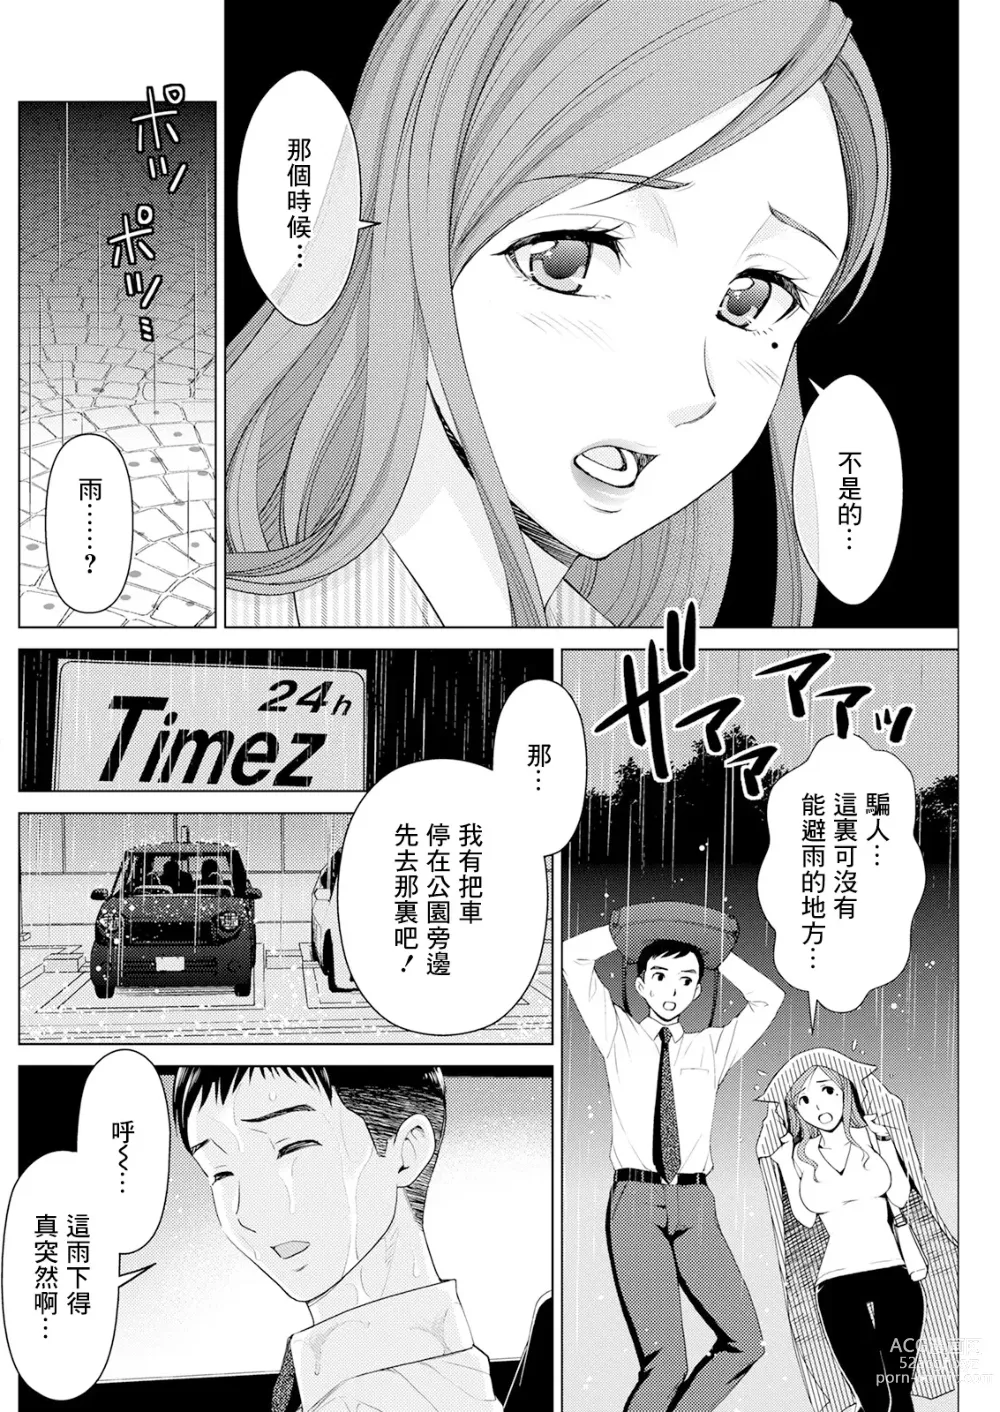 Page 4 of manga Kawari, Hateru.